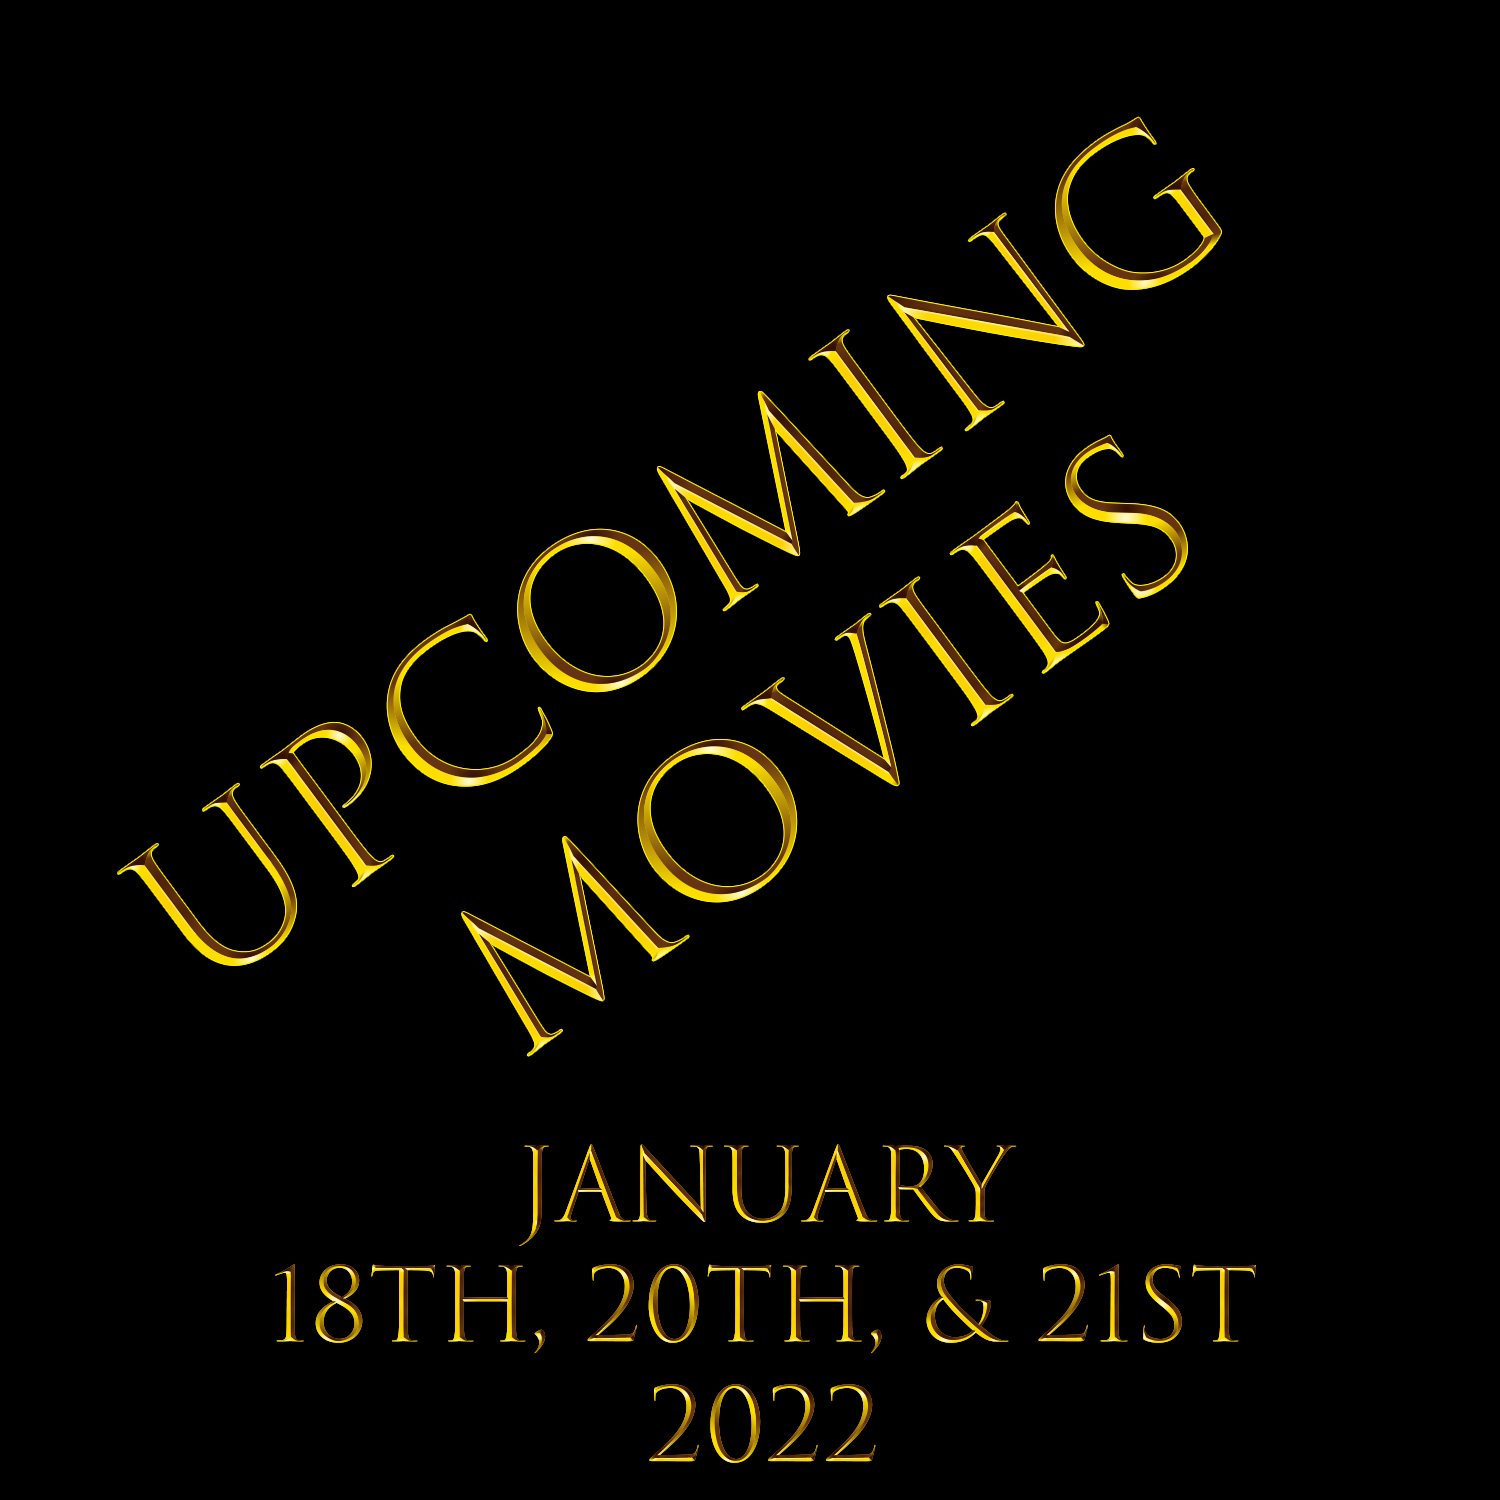 Upcoming Movies - January 20th, 2022